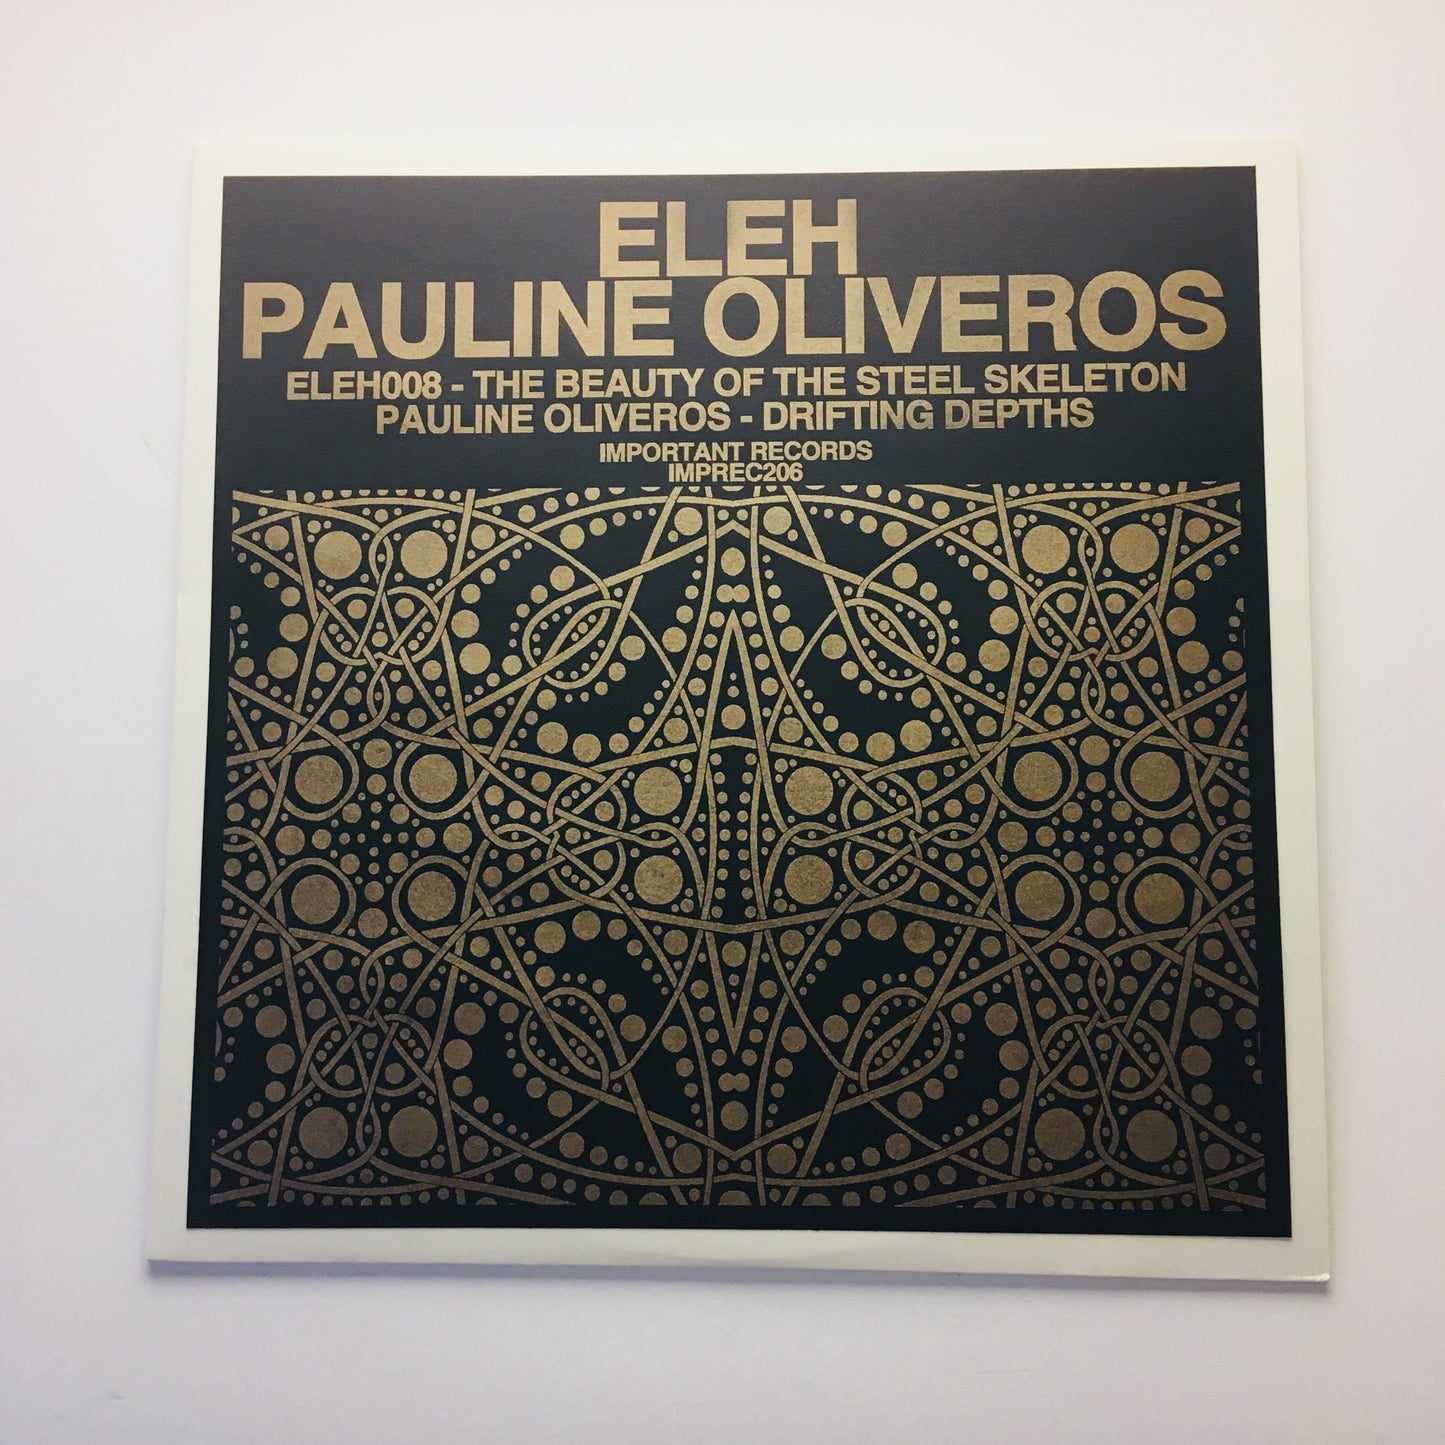 Eleh/Pauline Oliveros -  The Beauty of the Steel Skeleton/Drifting Depths - LP